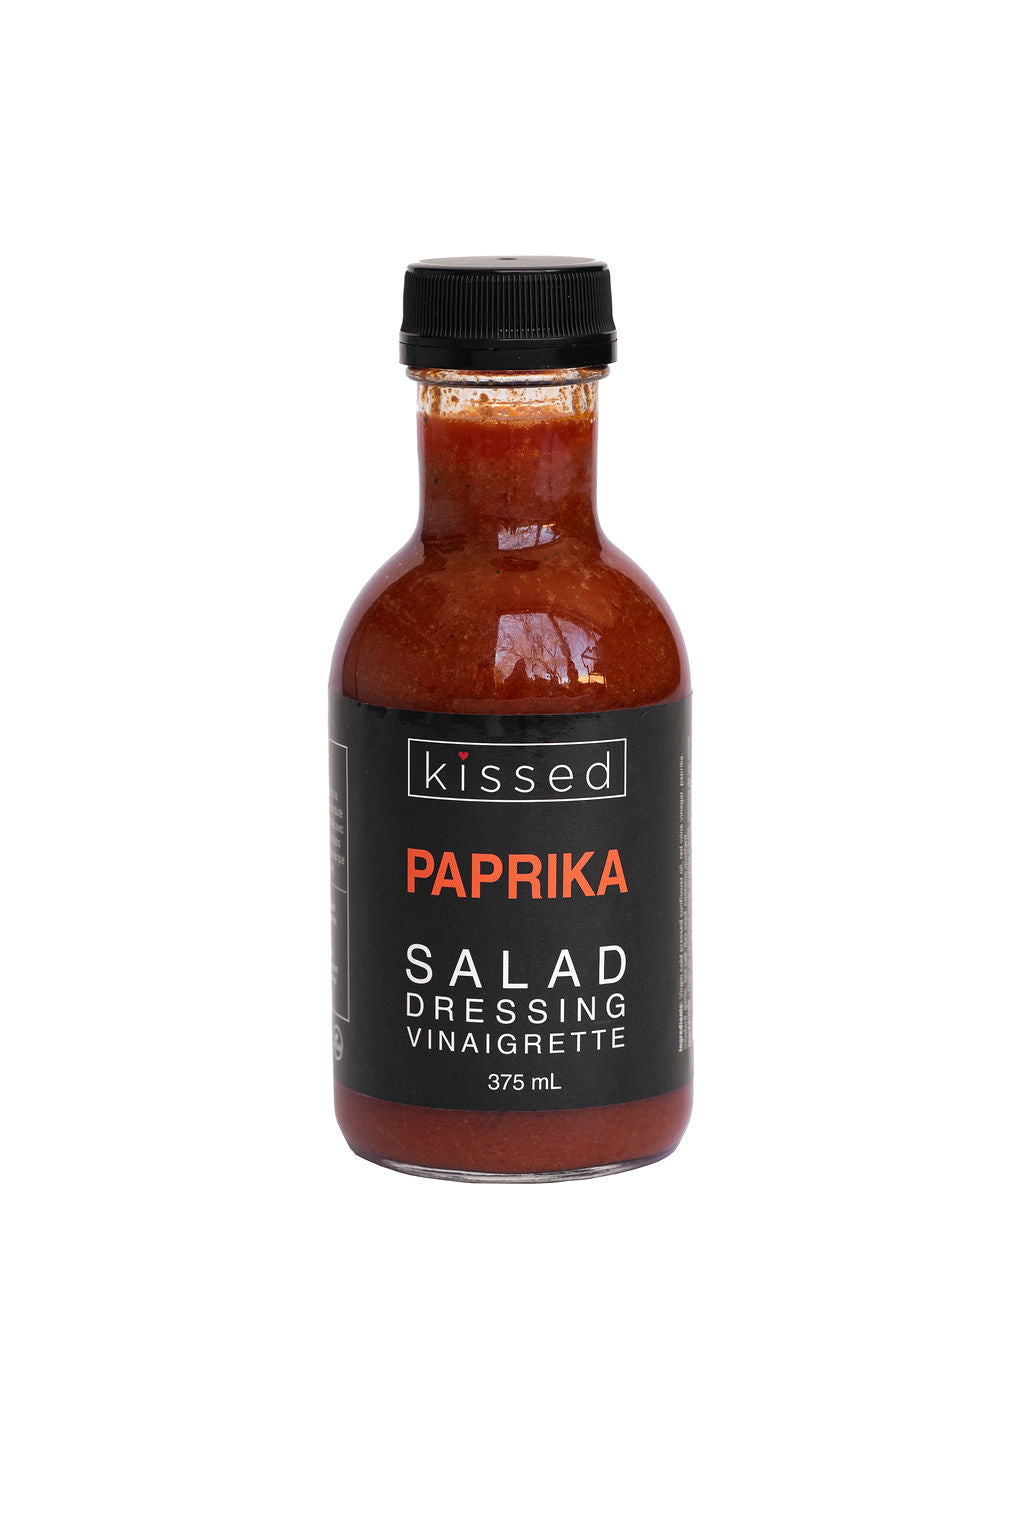 Kissed Paprika Salad Dressing/Vinaigrette - 375ml